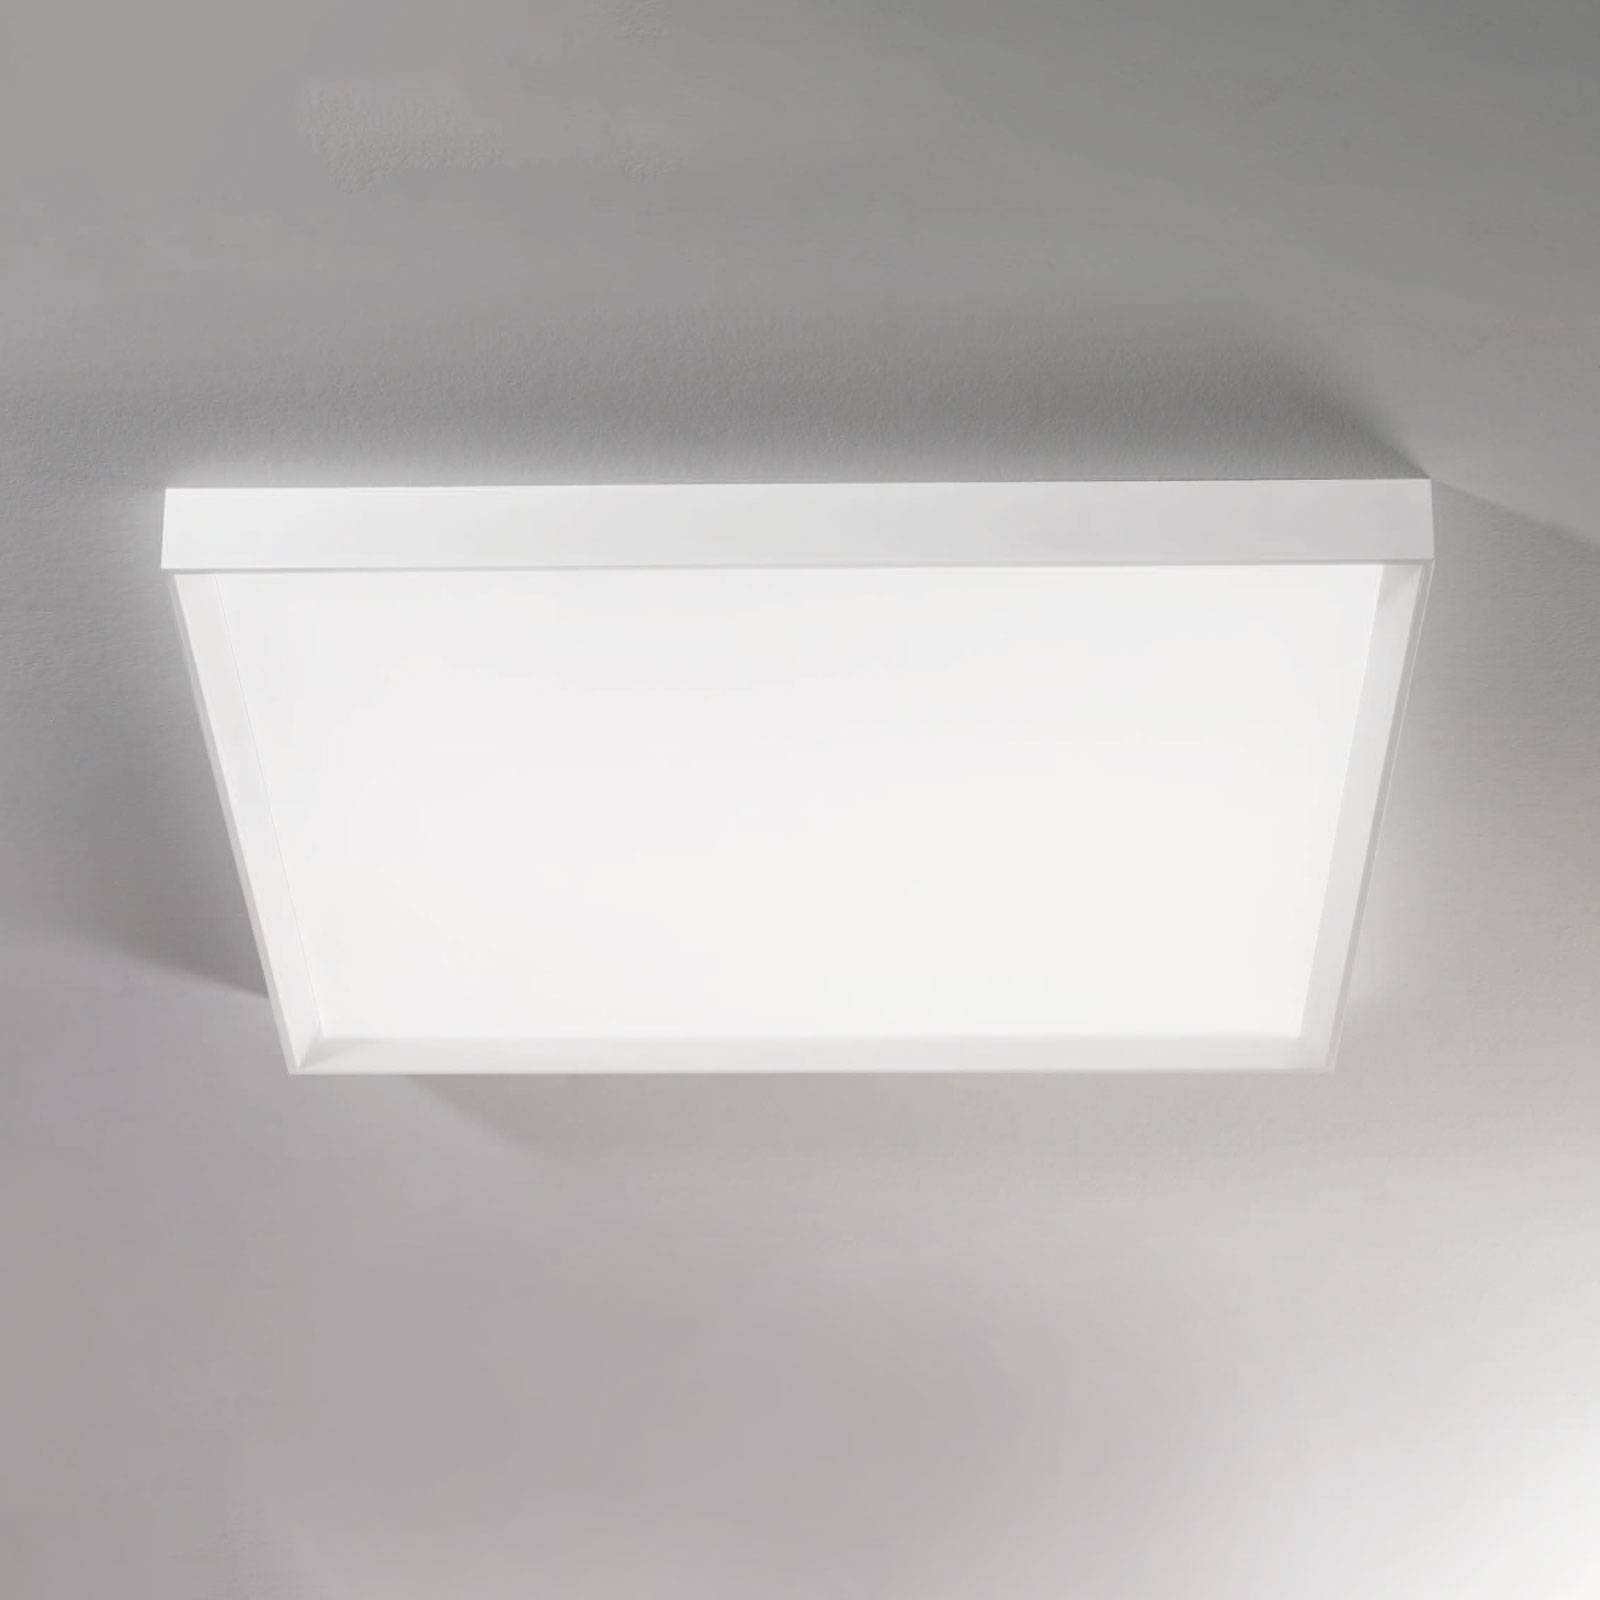 Lampa sufitowa LED Tara Maxi, 74 cm x 74 cm